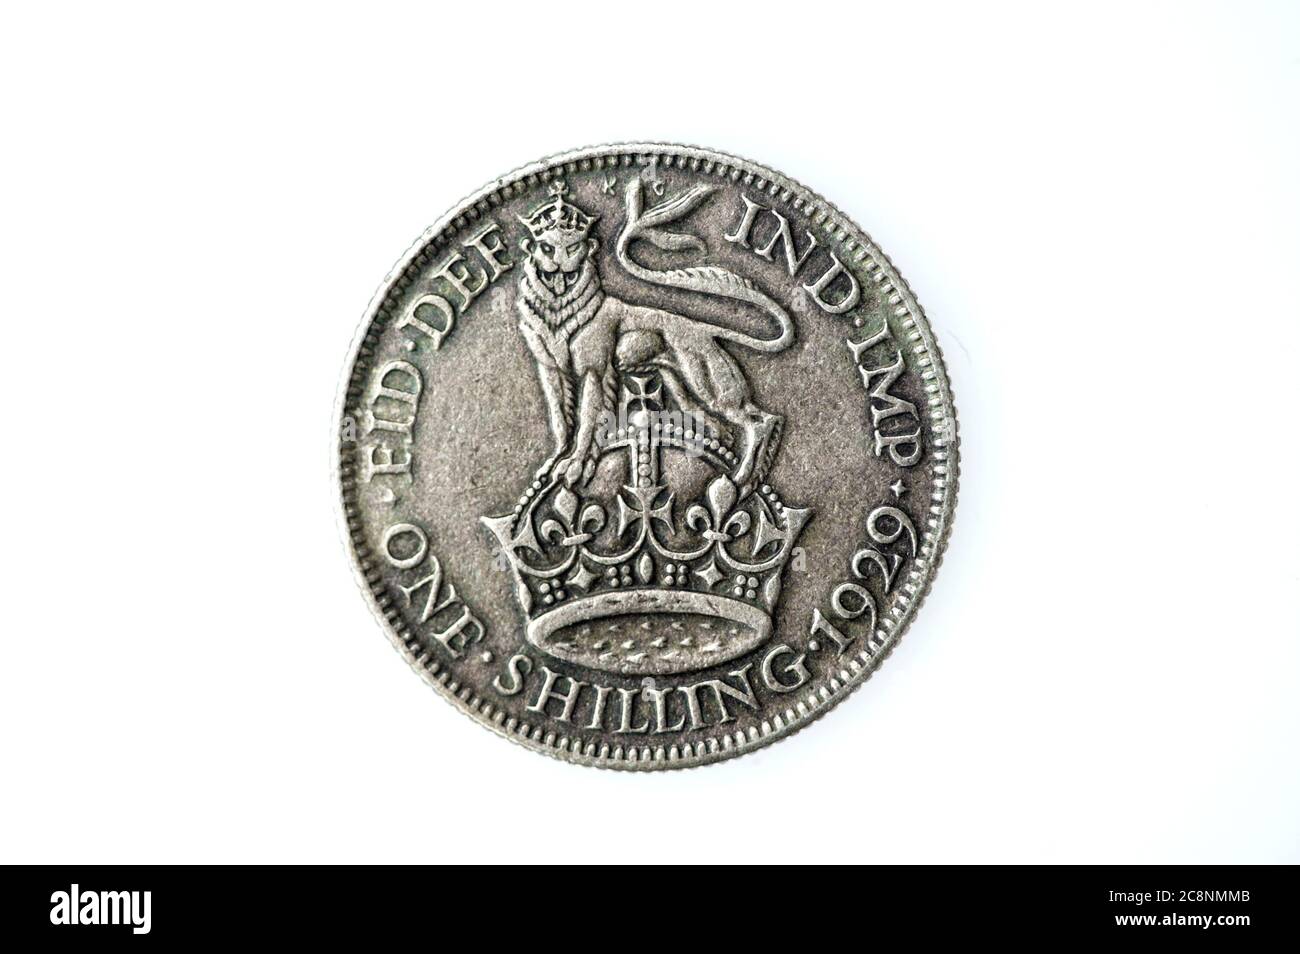 George V plata Inglés moneda de chelín una moneda obsoleta de Inglaterra Reino Unido doce pence una vigésima de la libra foto de stock Foto de stock